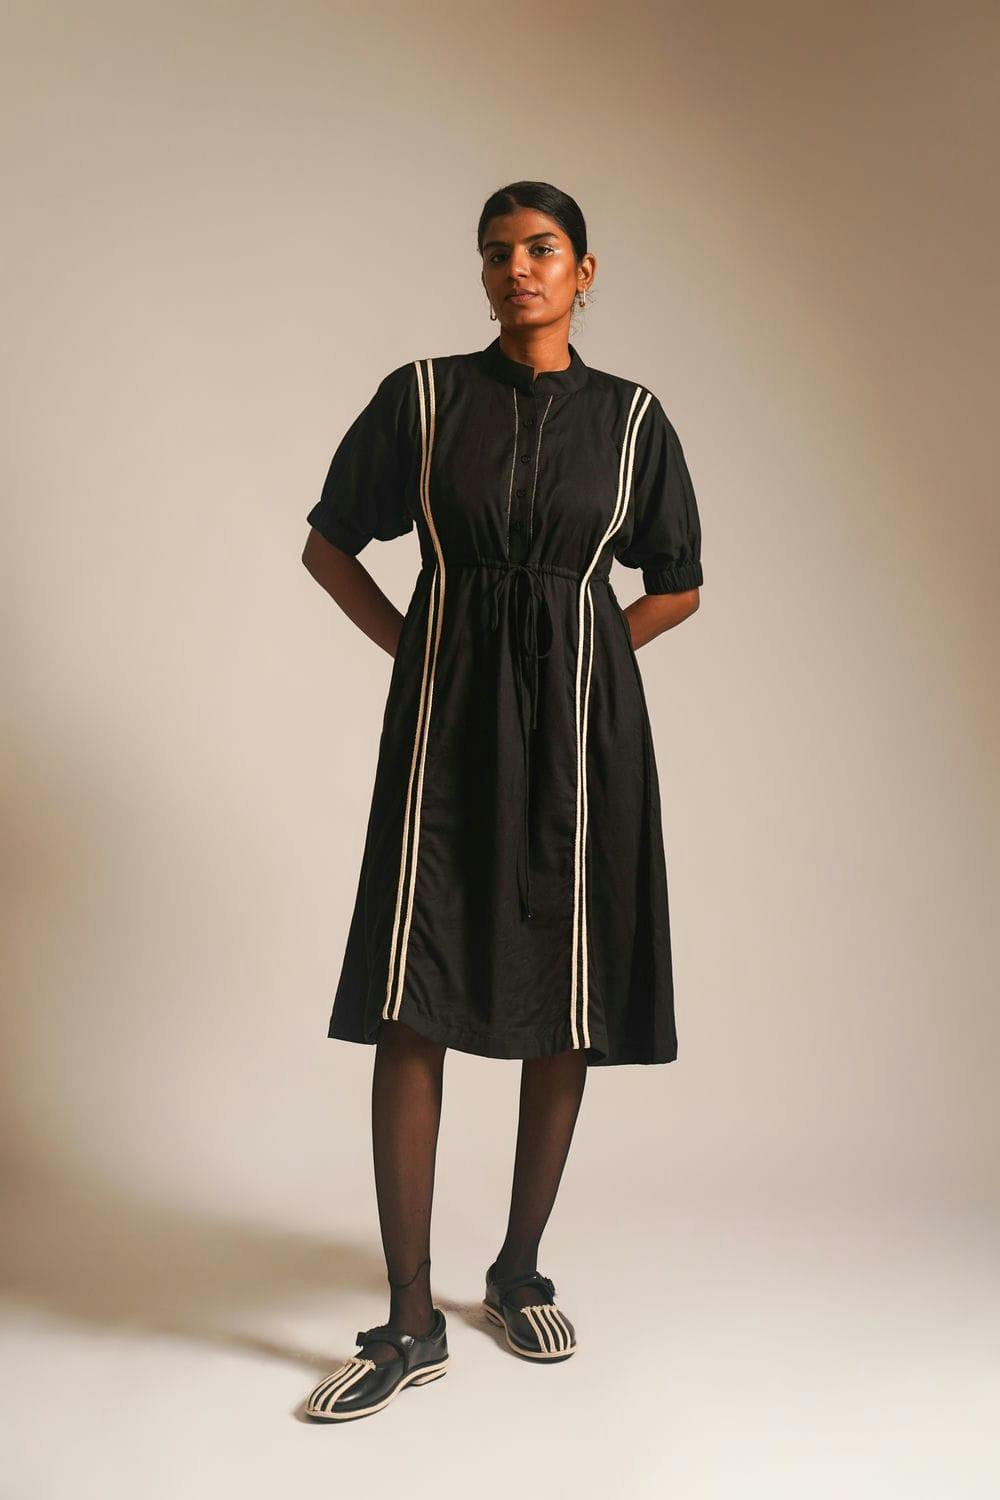 ATBW Ms. Peacemaker - Midi Dress, a product by ATBW